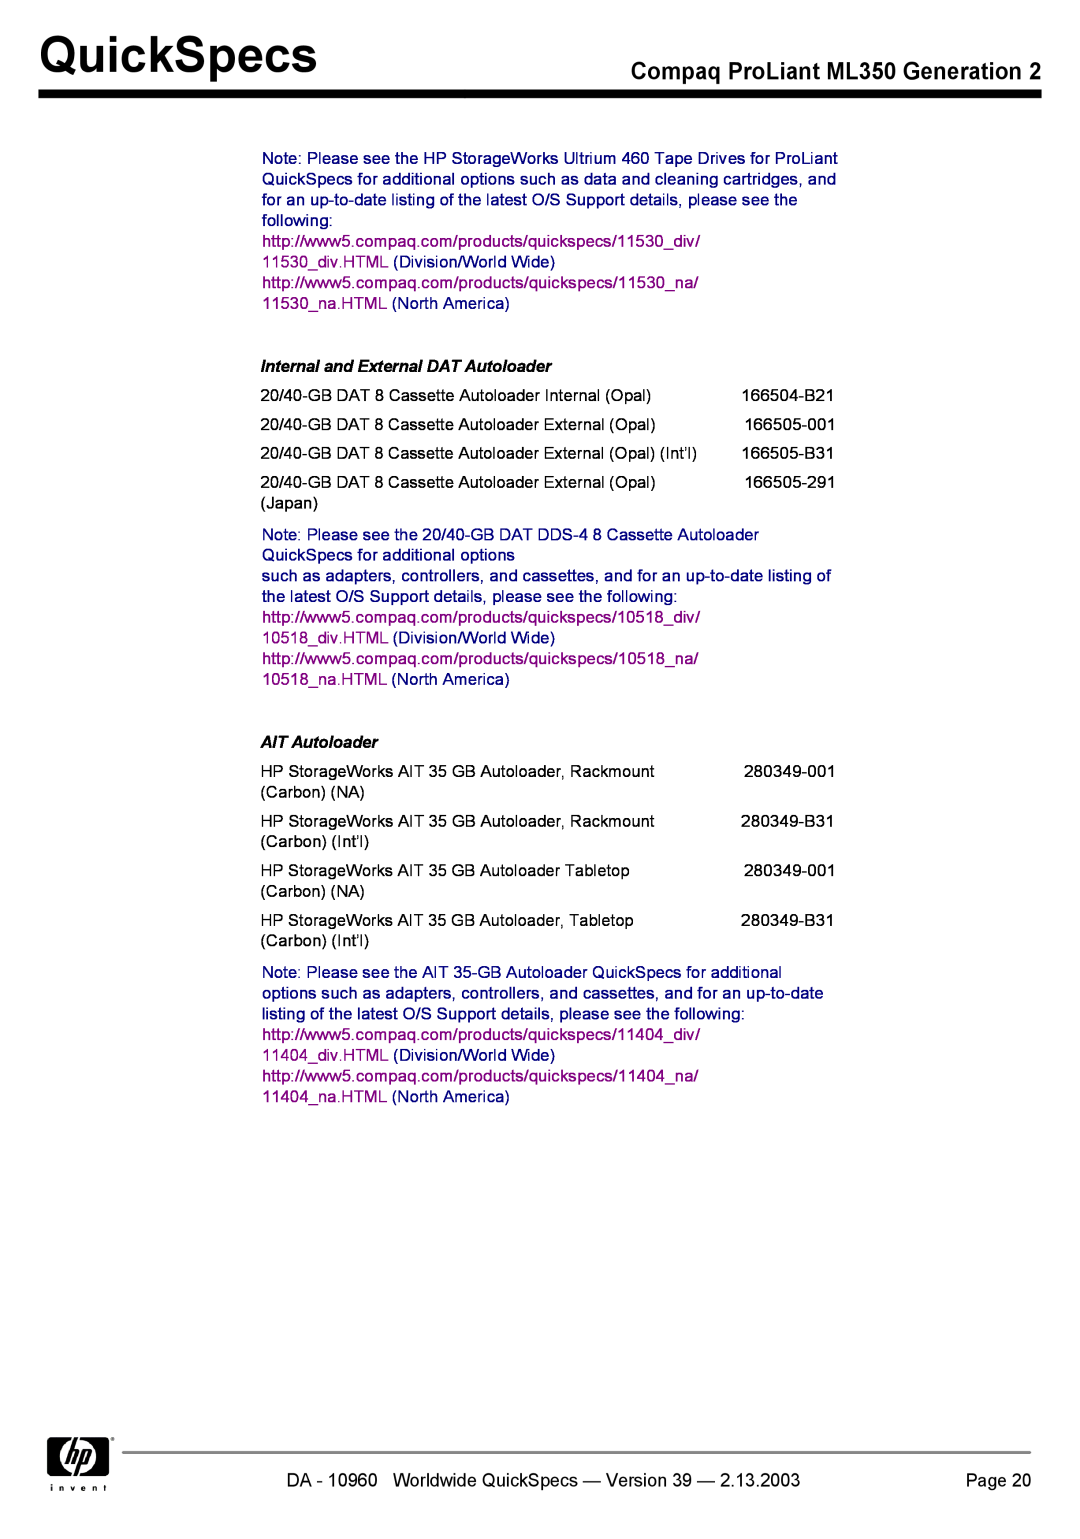 Compaq Internal and External DAT Autoloader, AIT Autoloader, QuickSpecs, Compaq ProLiant ML350 Generation, Page 